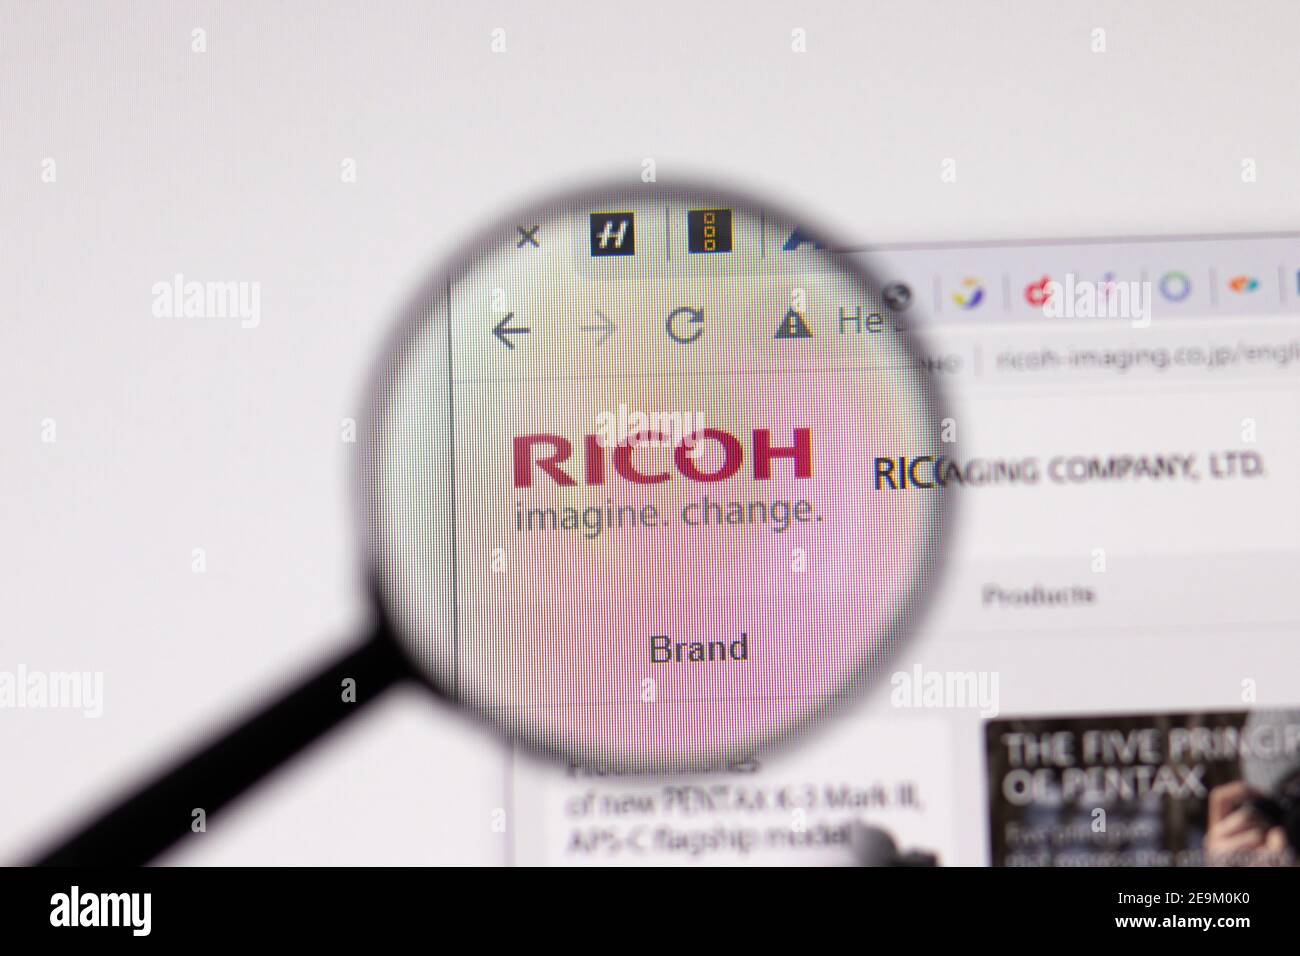 Los Angeles, USA - 1. Februar 2021: Pentax Ricoh Imaging Webseite. ricoh-imaging.co.jp Logo auf dem Display, illustrative Editorial Stockfoto